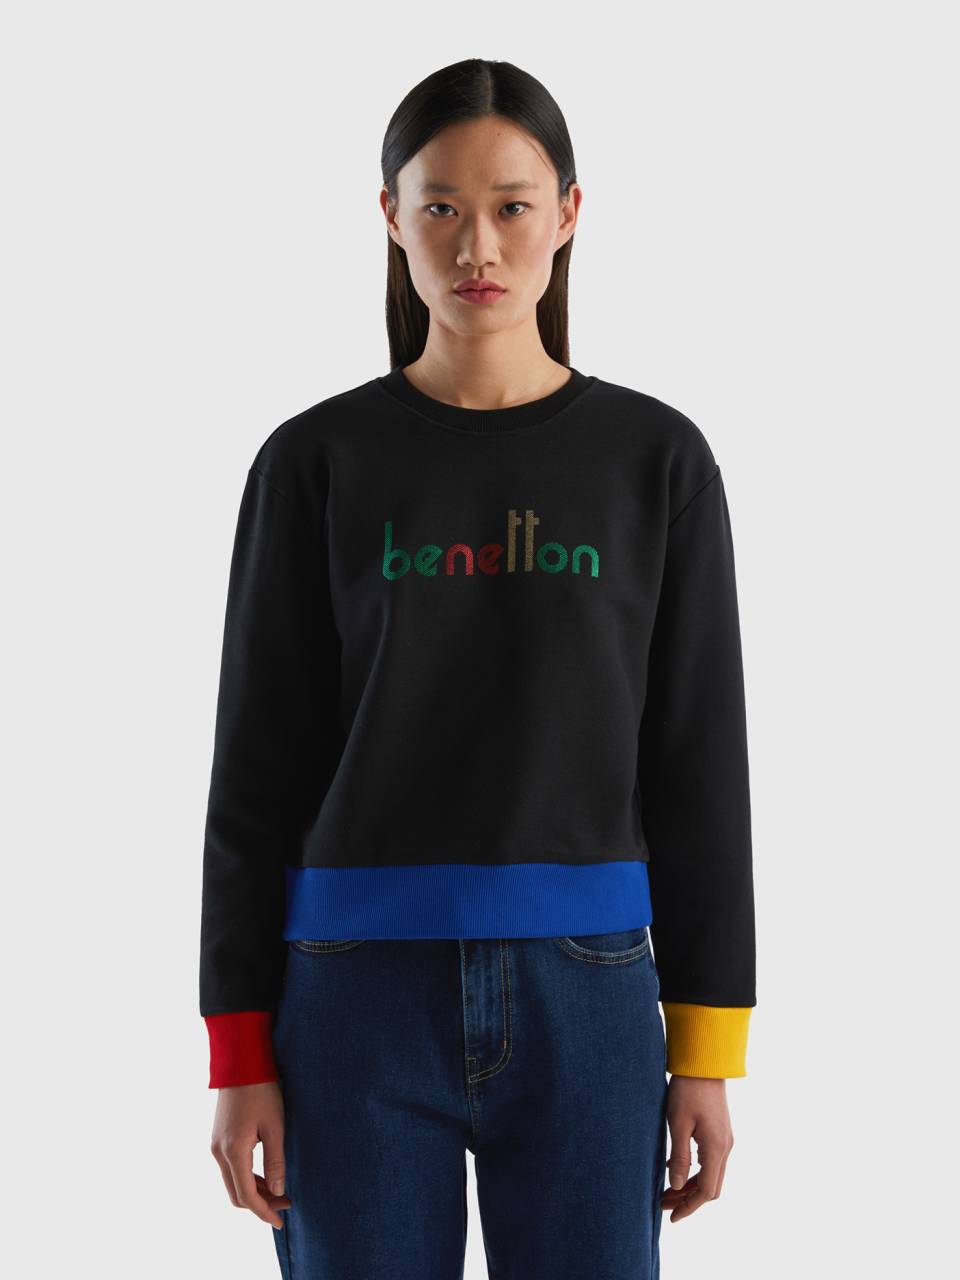 Benetton 100% cotton sweatshirt with logo print. 1